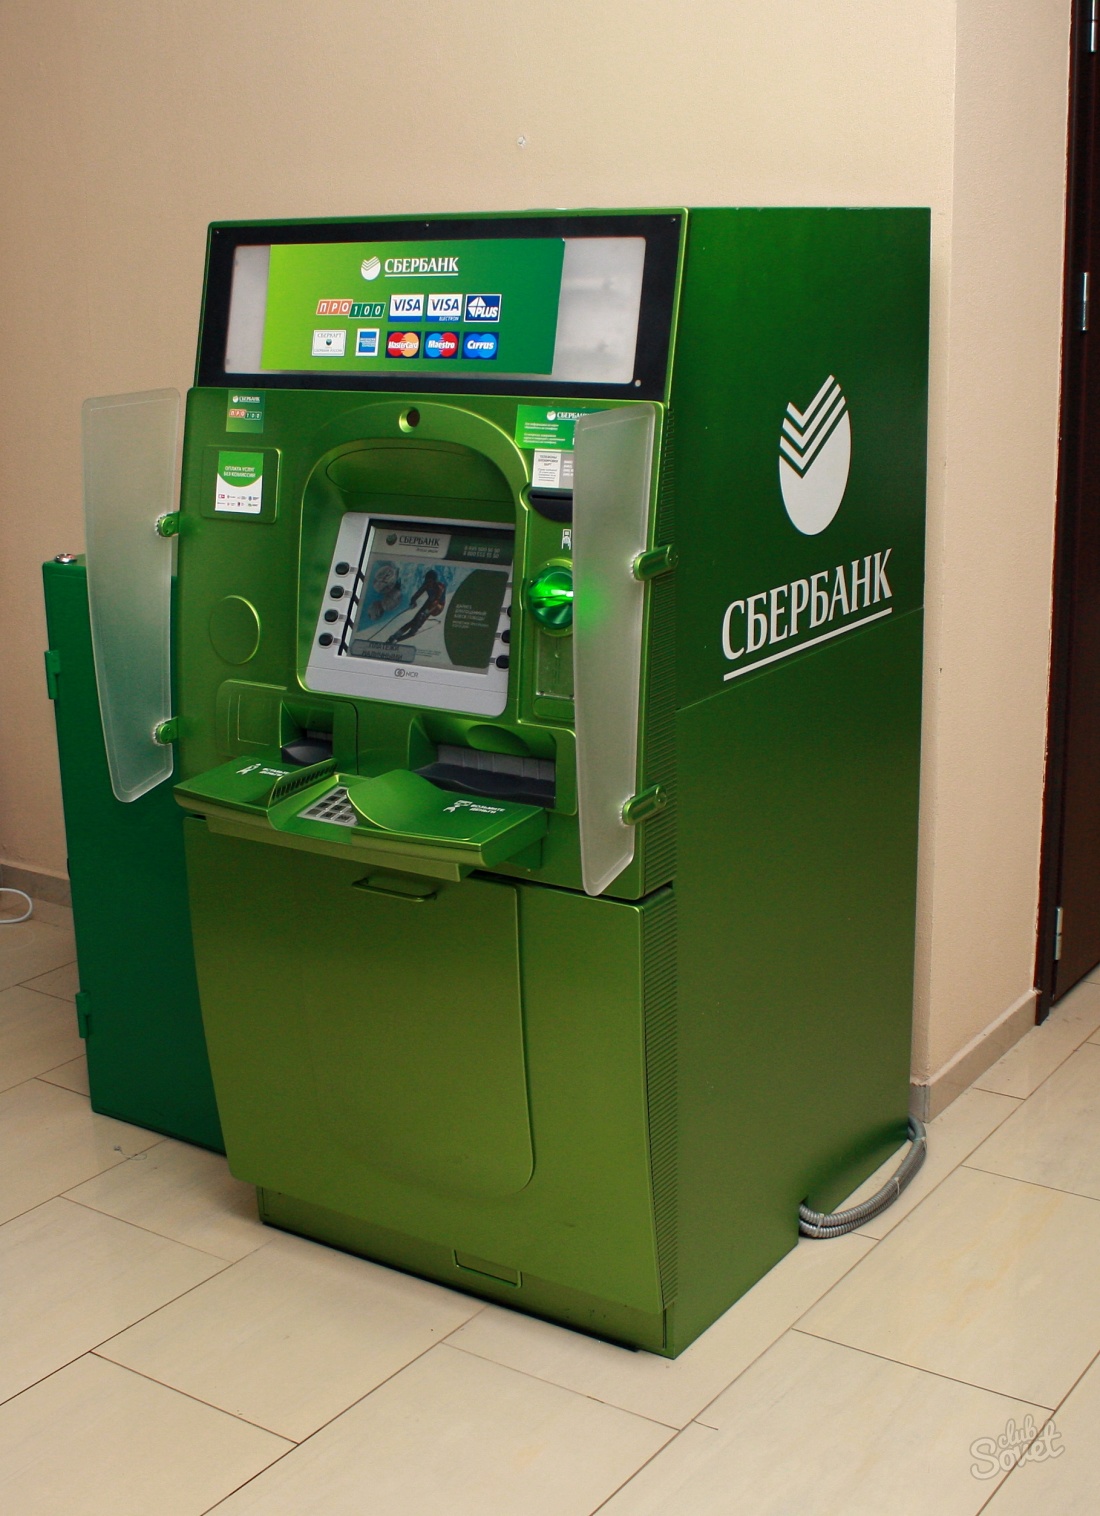 How to pay through the Sberbank terminal